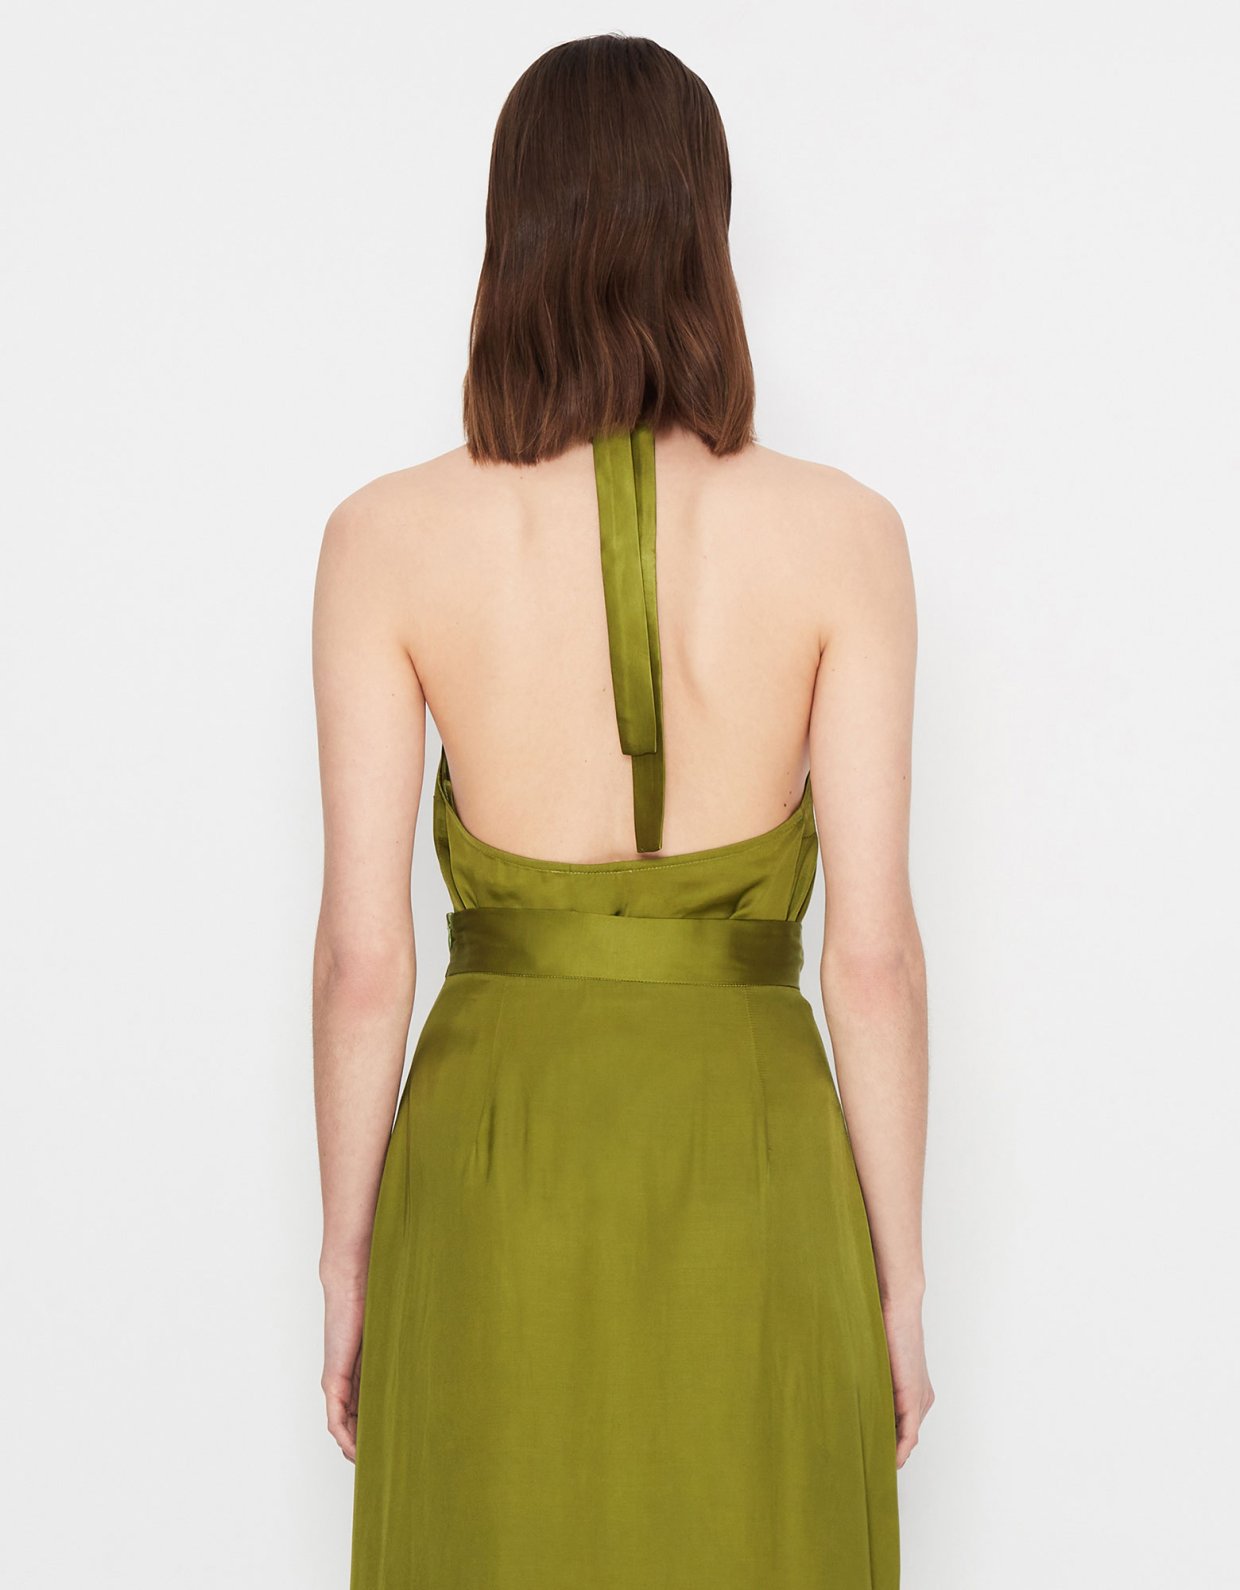 Nadia Rapti Breeze of nostalgia mid skirt olive green